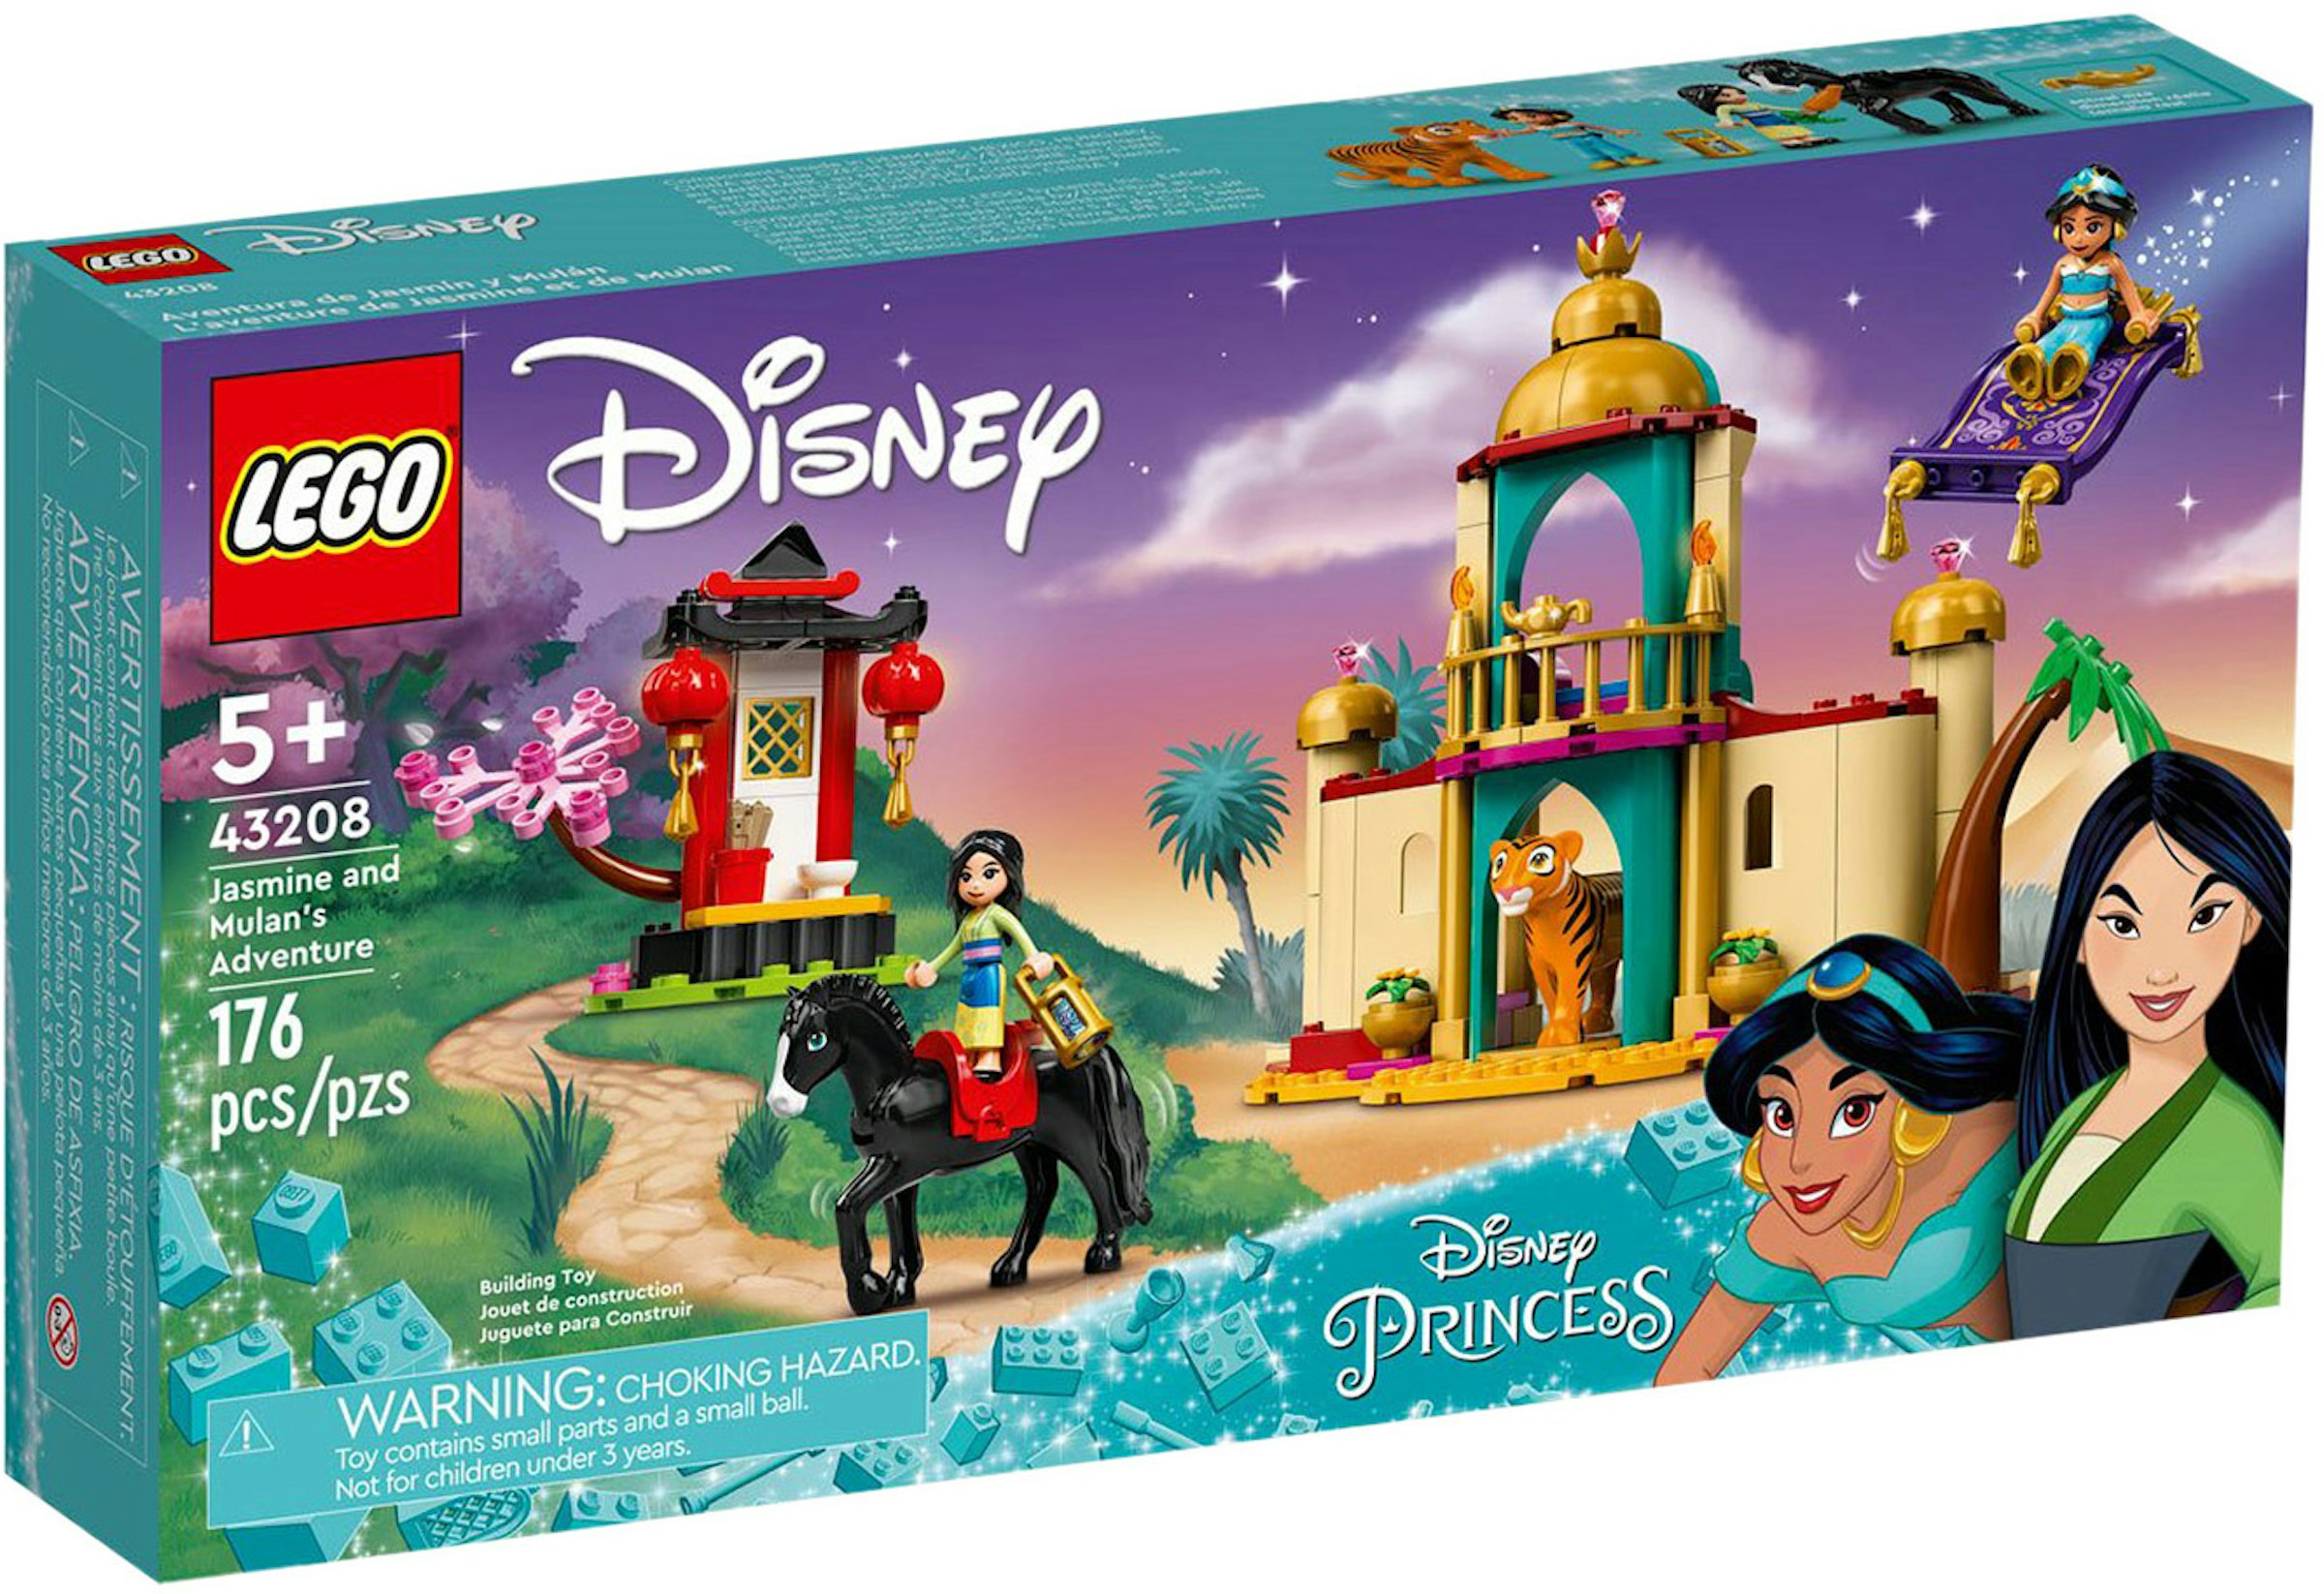 LEGO Disney Princess Jasmine and Mulan's Adventure Set 43208 SS22 - JP